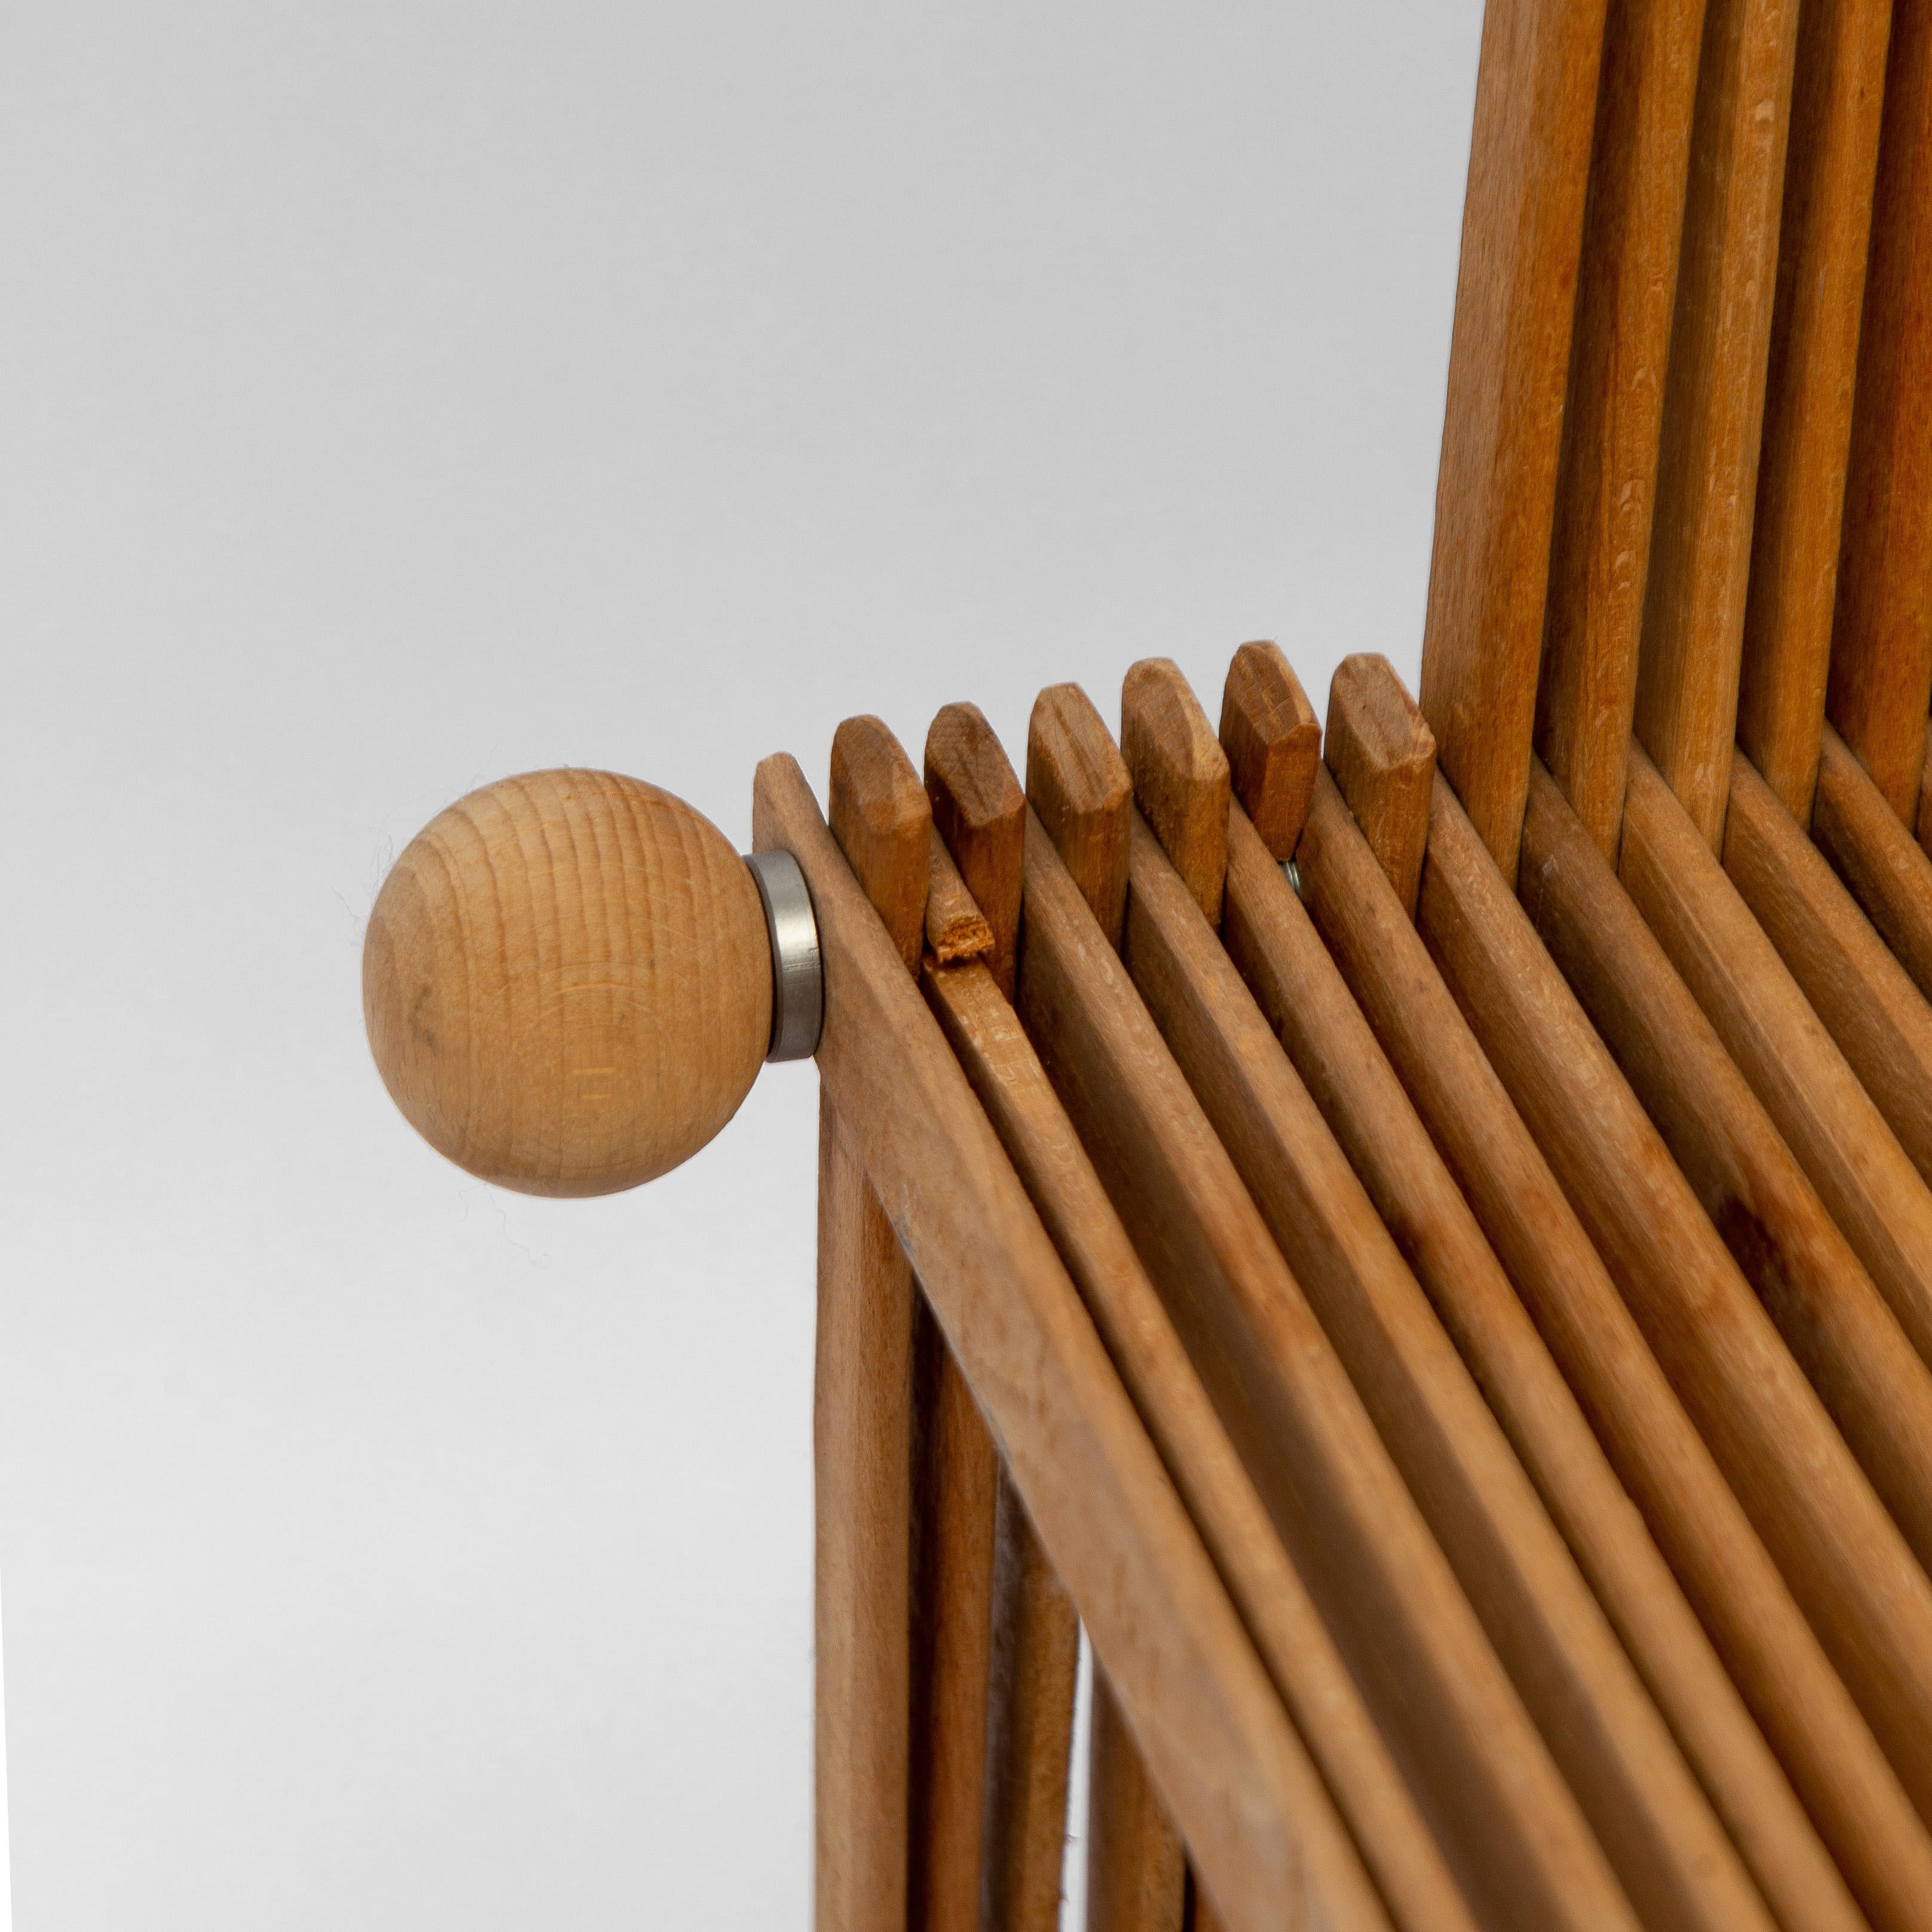 Scandinavian Wooden Vintage Slatted Popstical Stick Design Chair, Prototype, 1980s